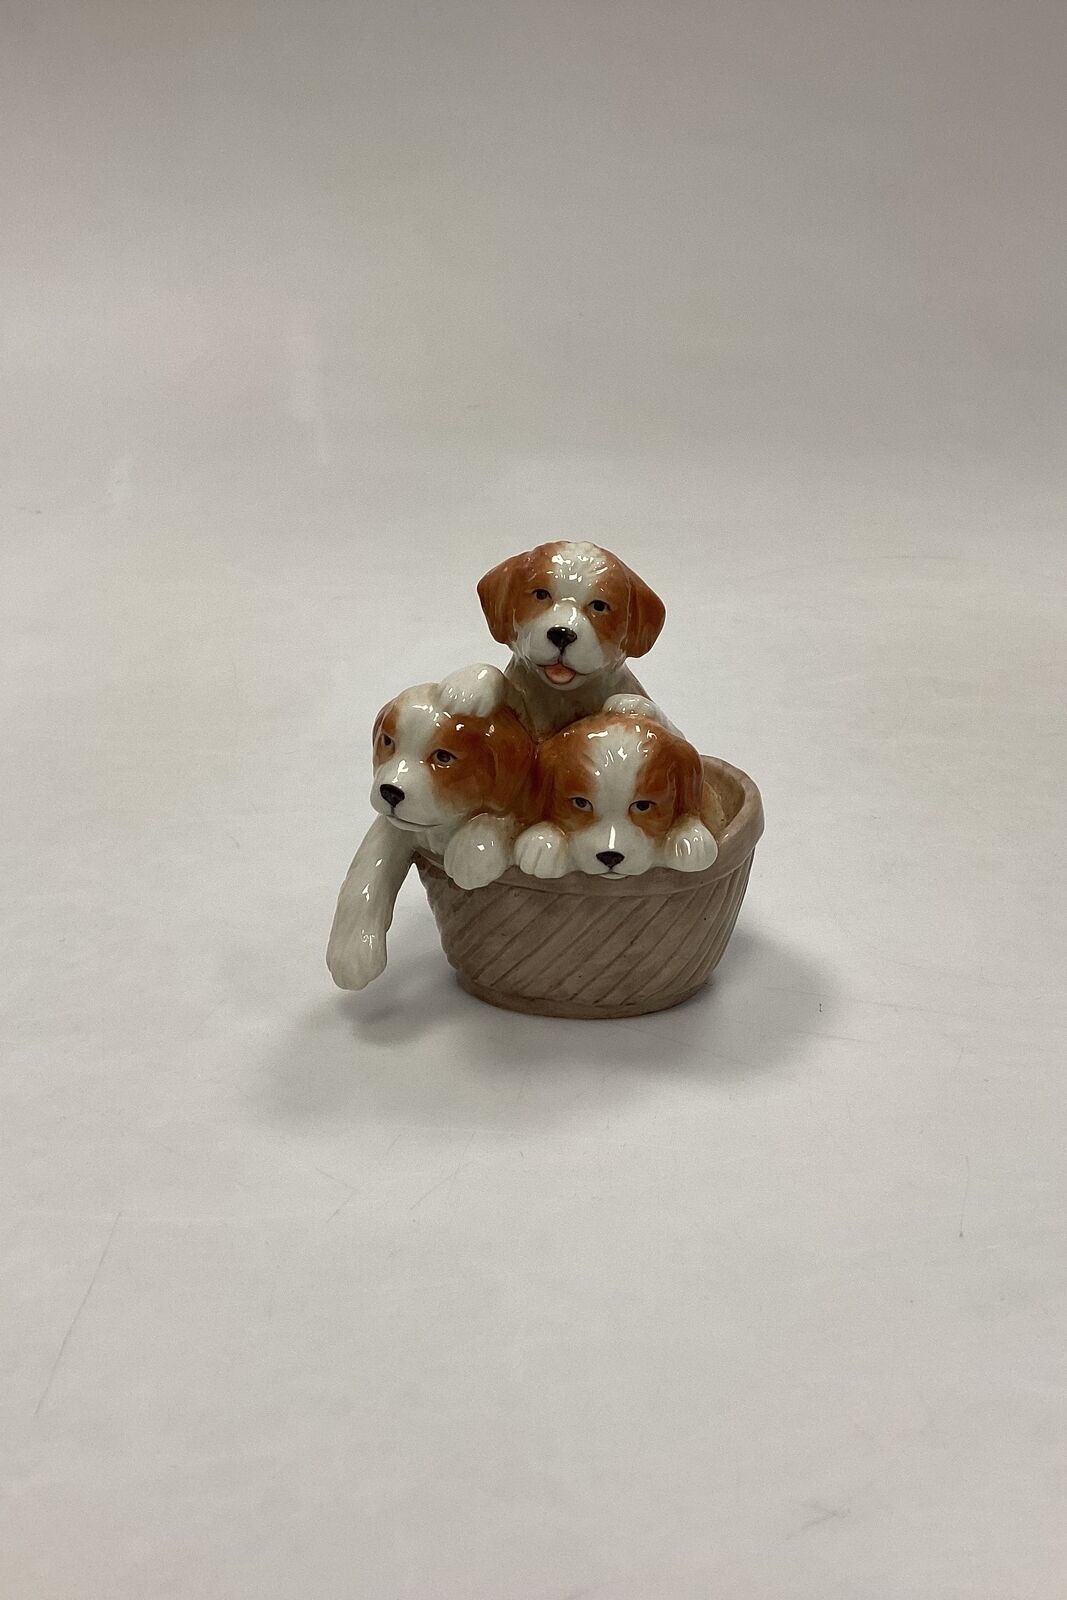 Royal Copenhagen Mini Collection - Mutt/ Puppies in Basket No 745